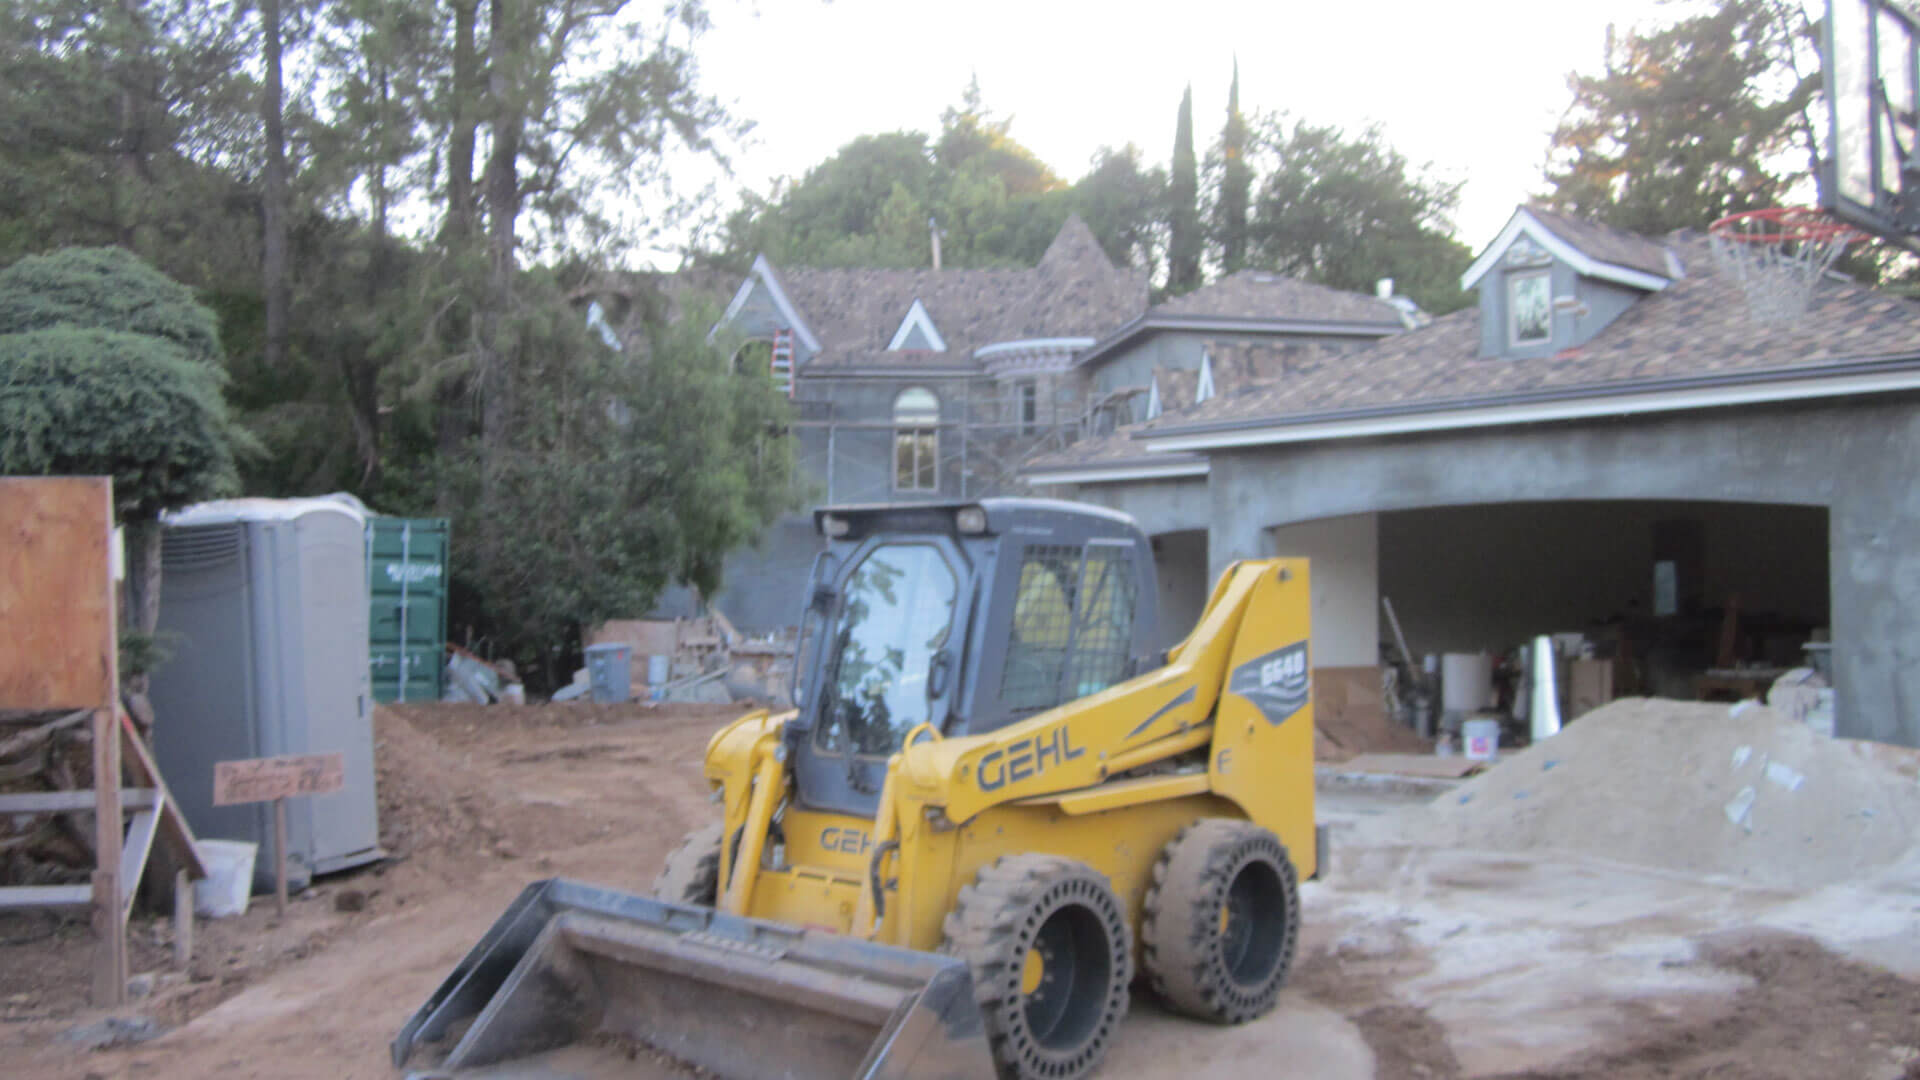 San Jose Landscaping Company, Concrete Contractor and Landscaper